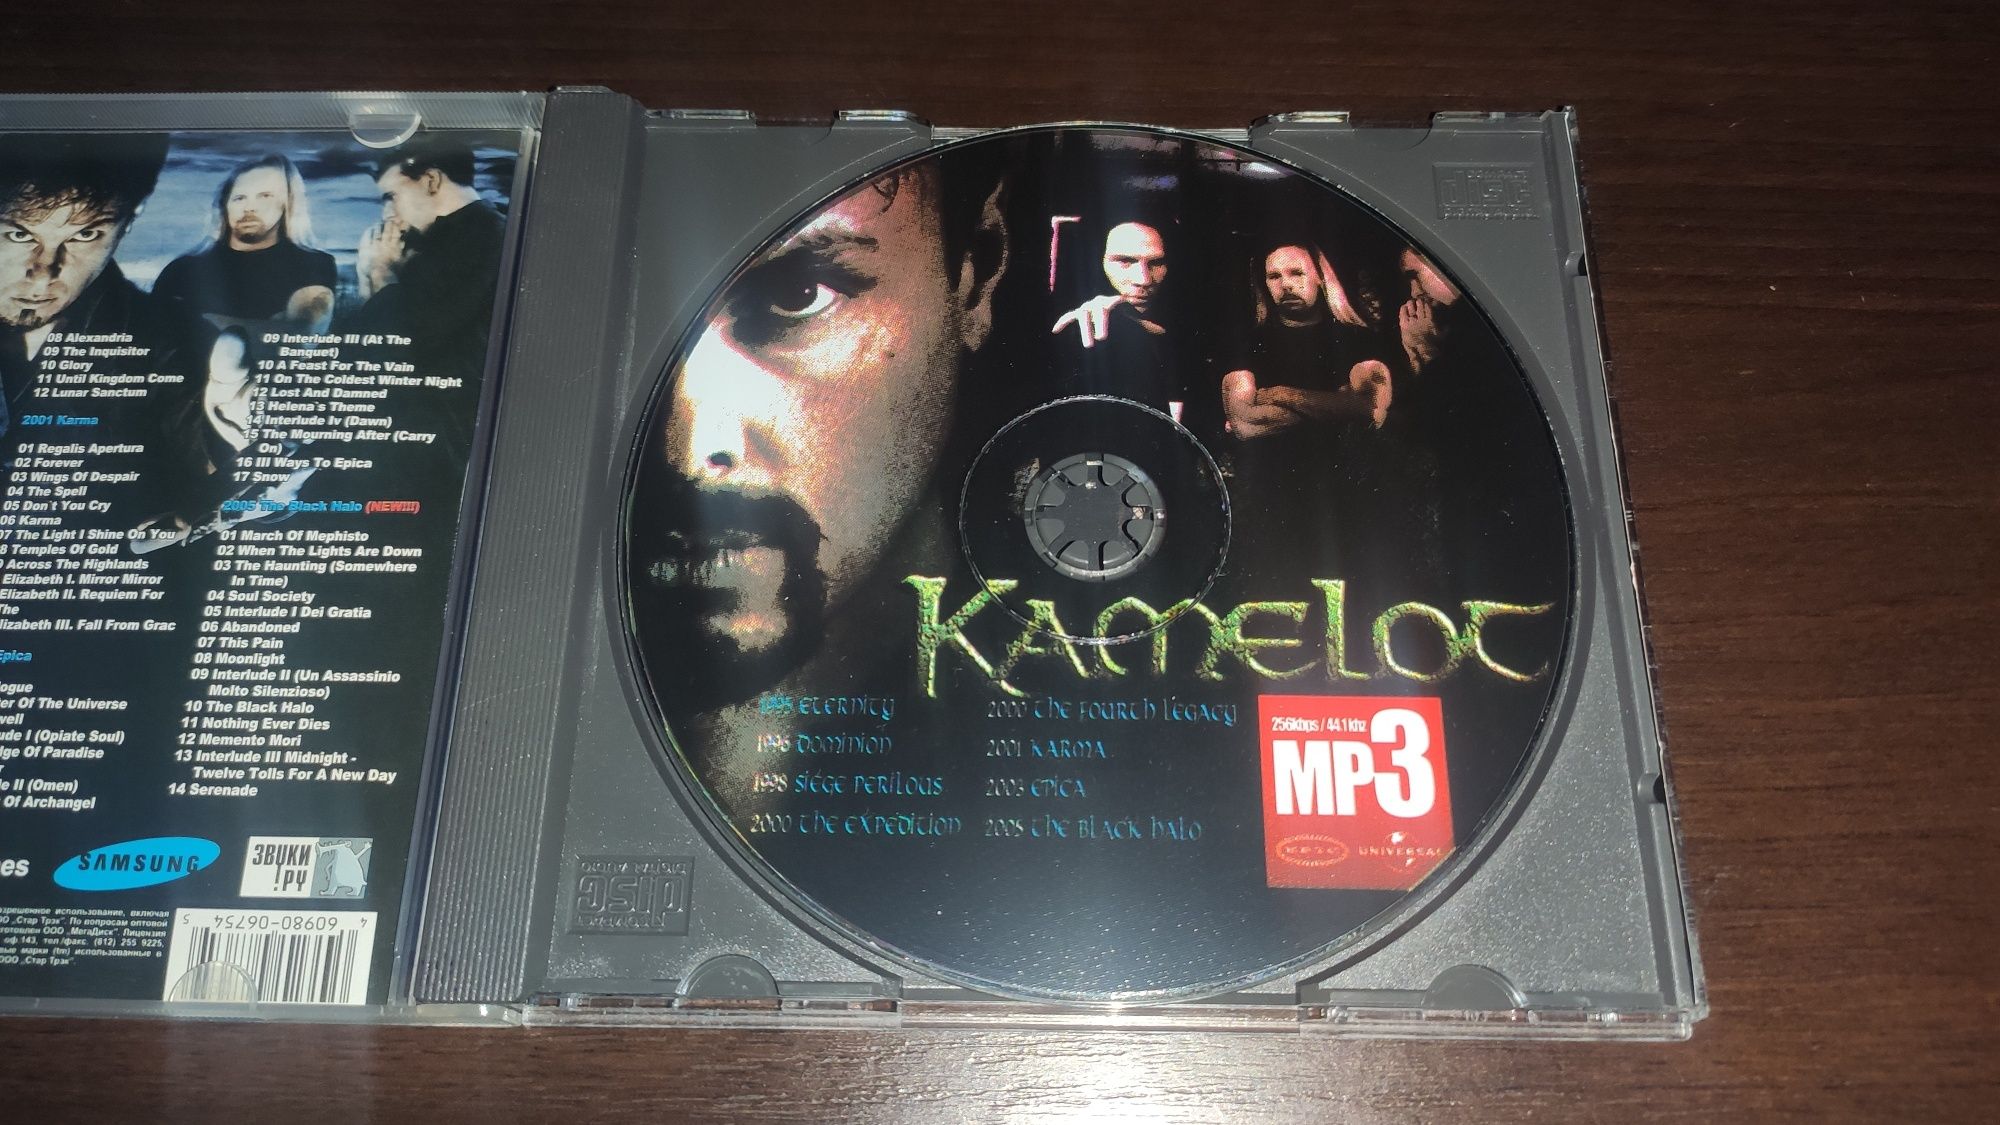 Kamelot MP3 (1995-2005)